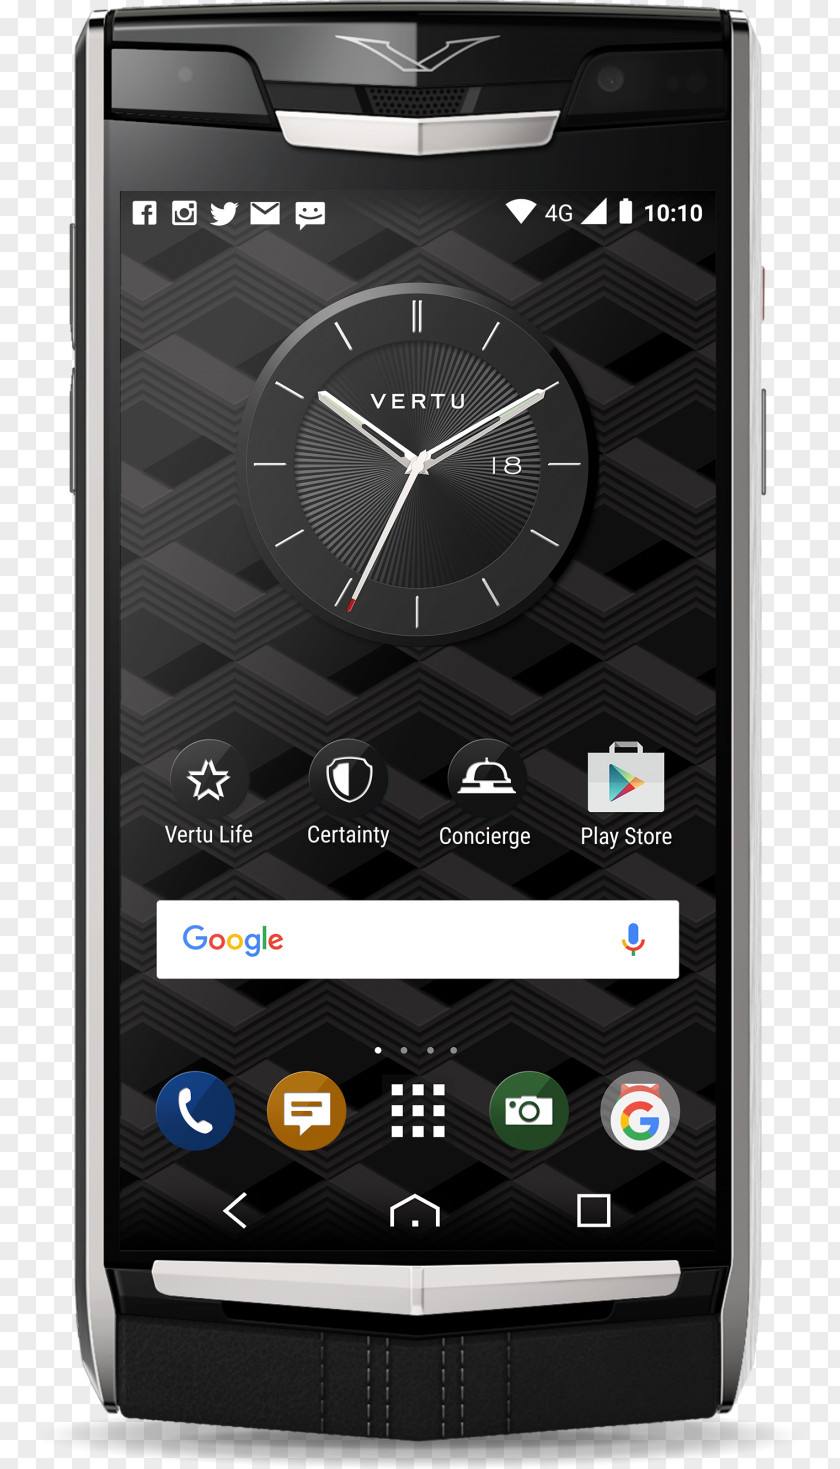 BlackSmartphone Vertu Signature Smartphone Telephone BlackBerry Torch 9800 512 MB PNG